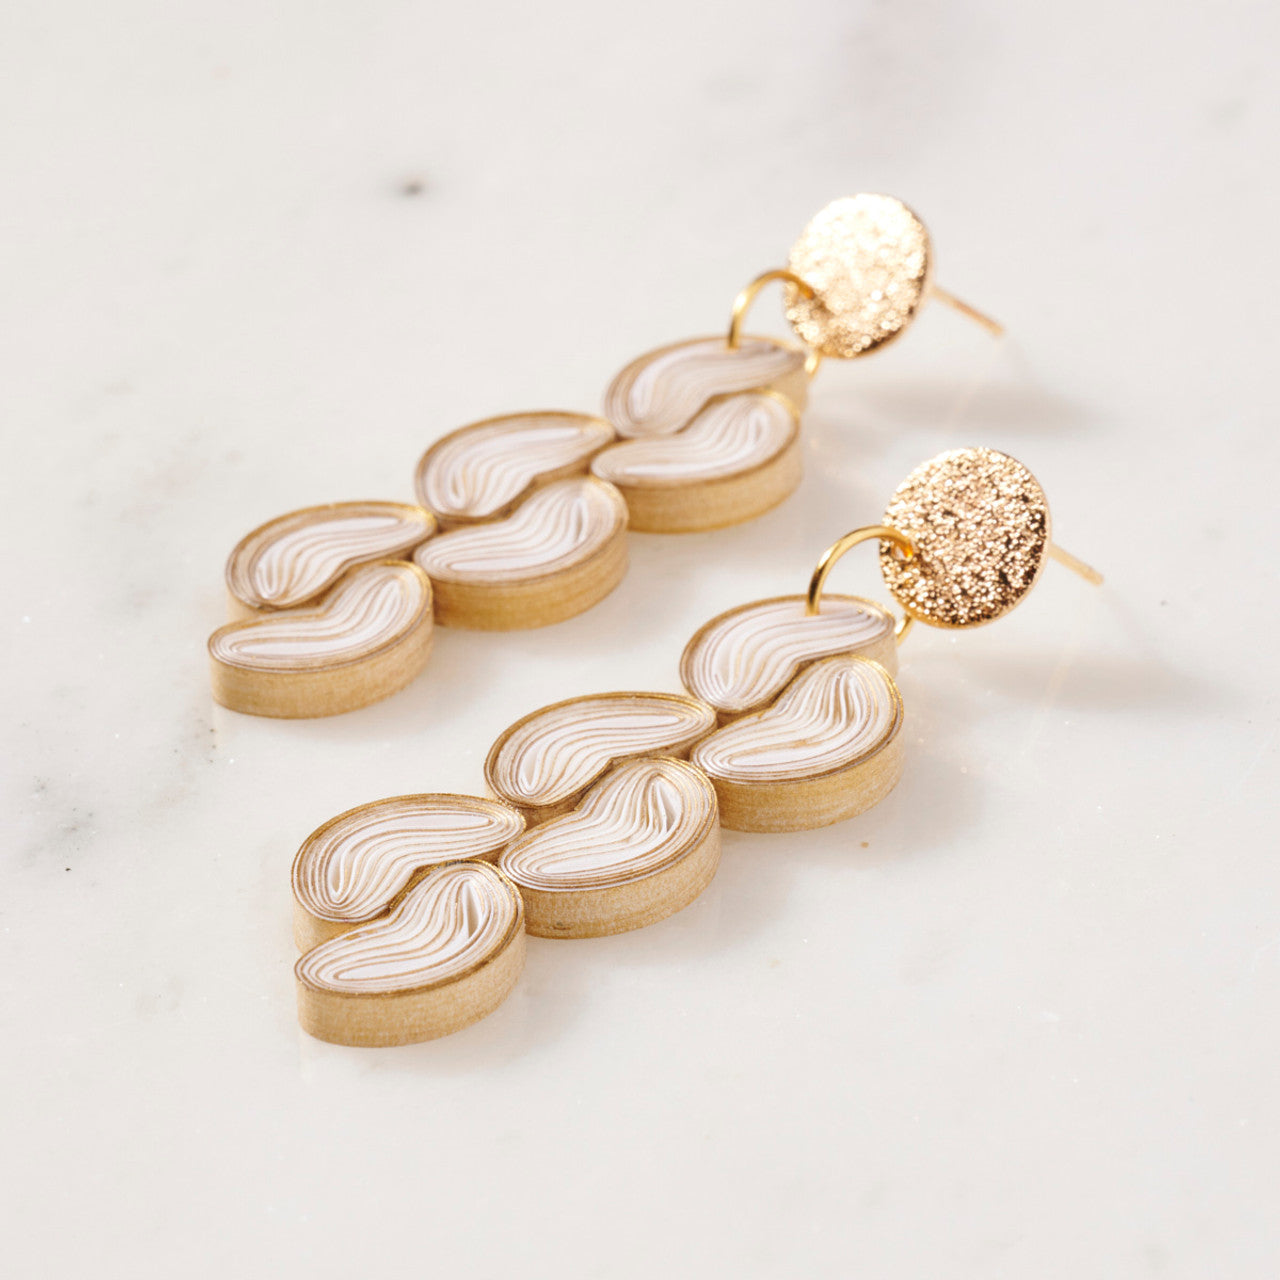 Sedona: Wearable Art Dangle Earrings, Handmade Art Deco inspired dangle earrings, architectural, geometric white and gold, lightweight neutral paper quilling